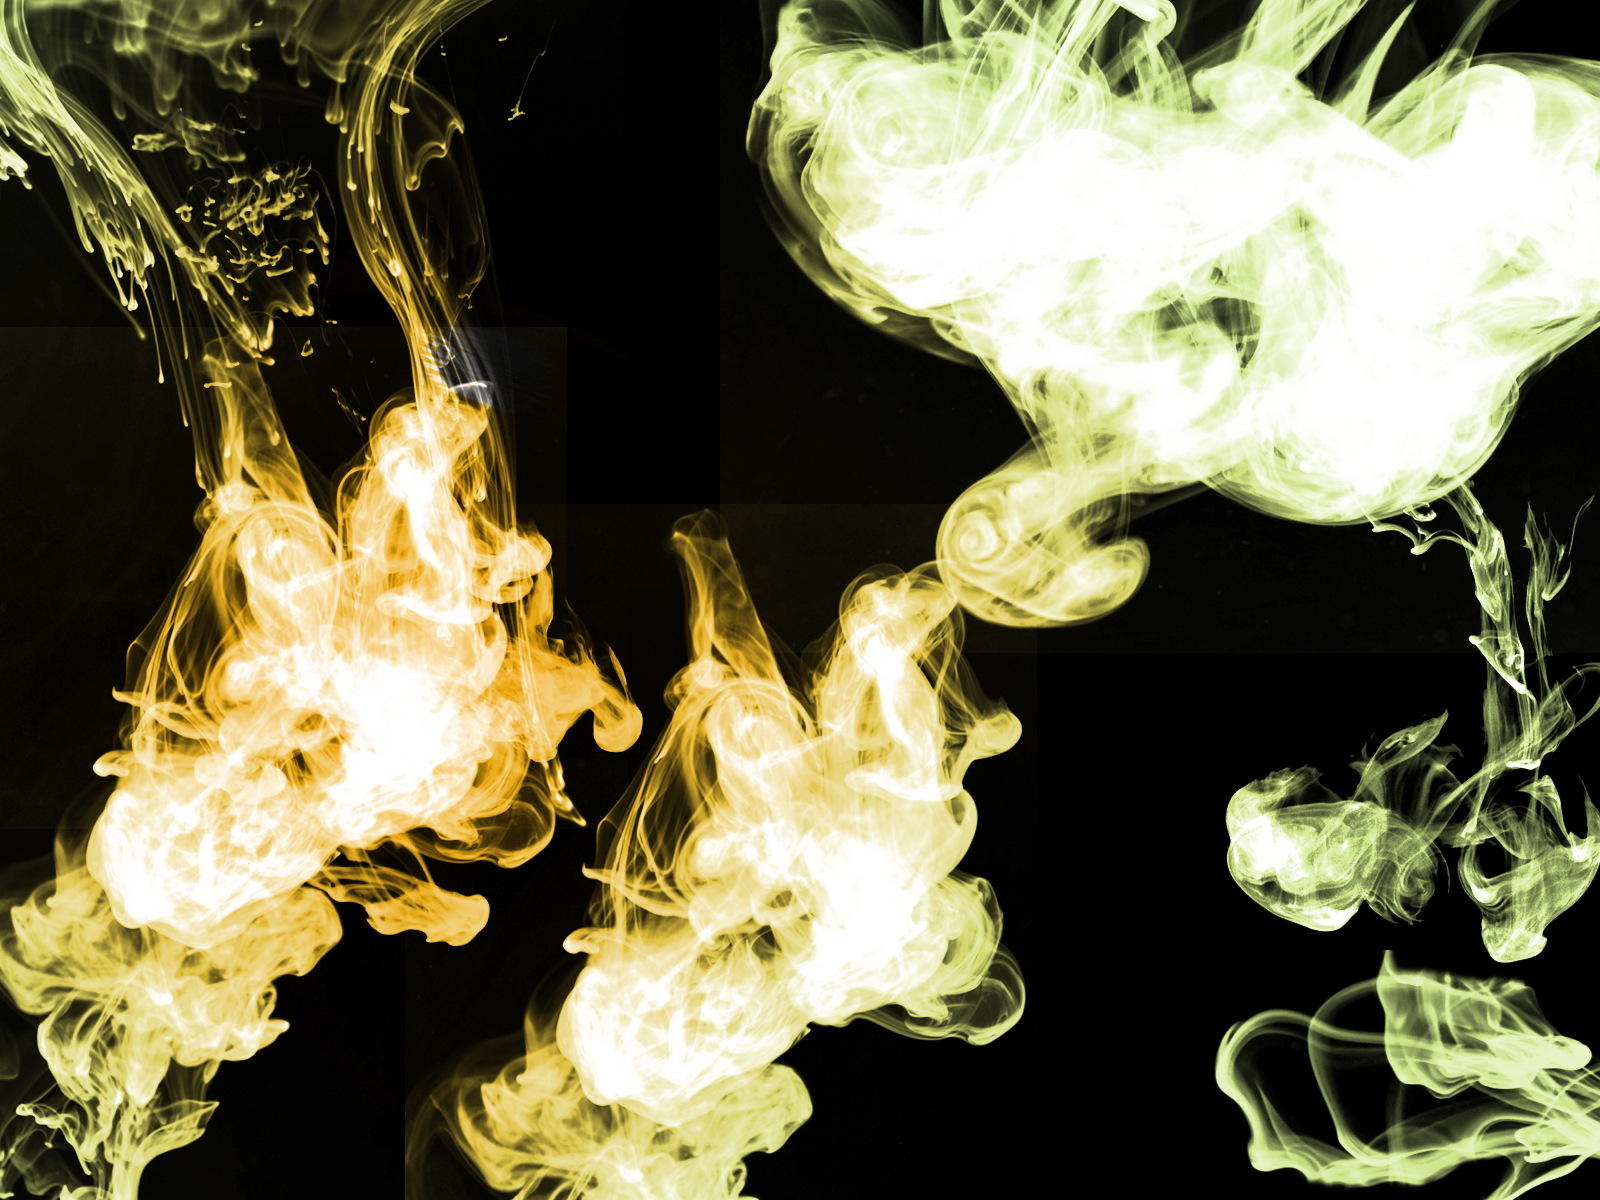 Abstract Smoke HD Wallpaper | Background Image